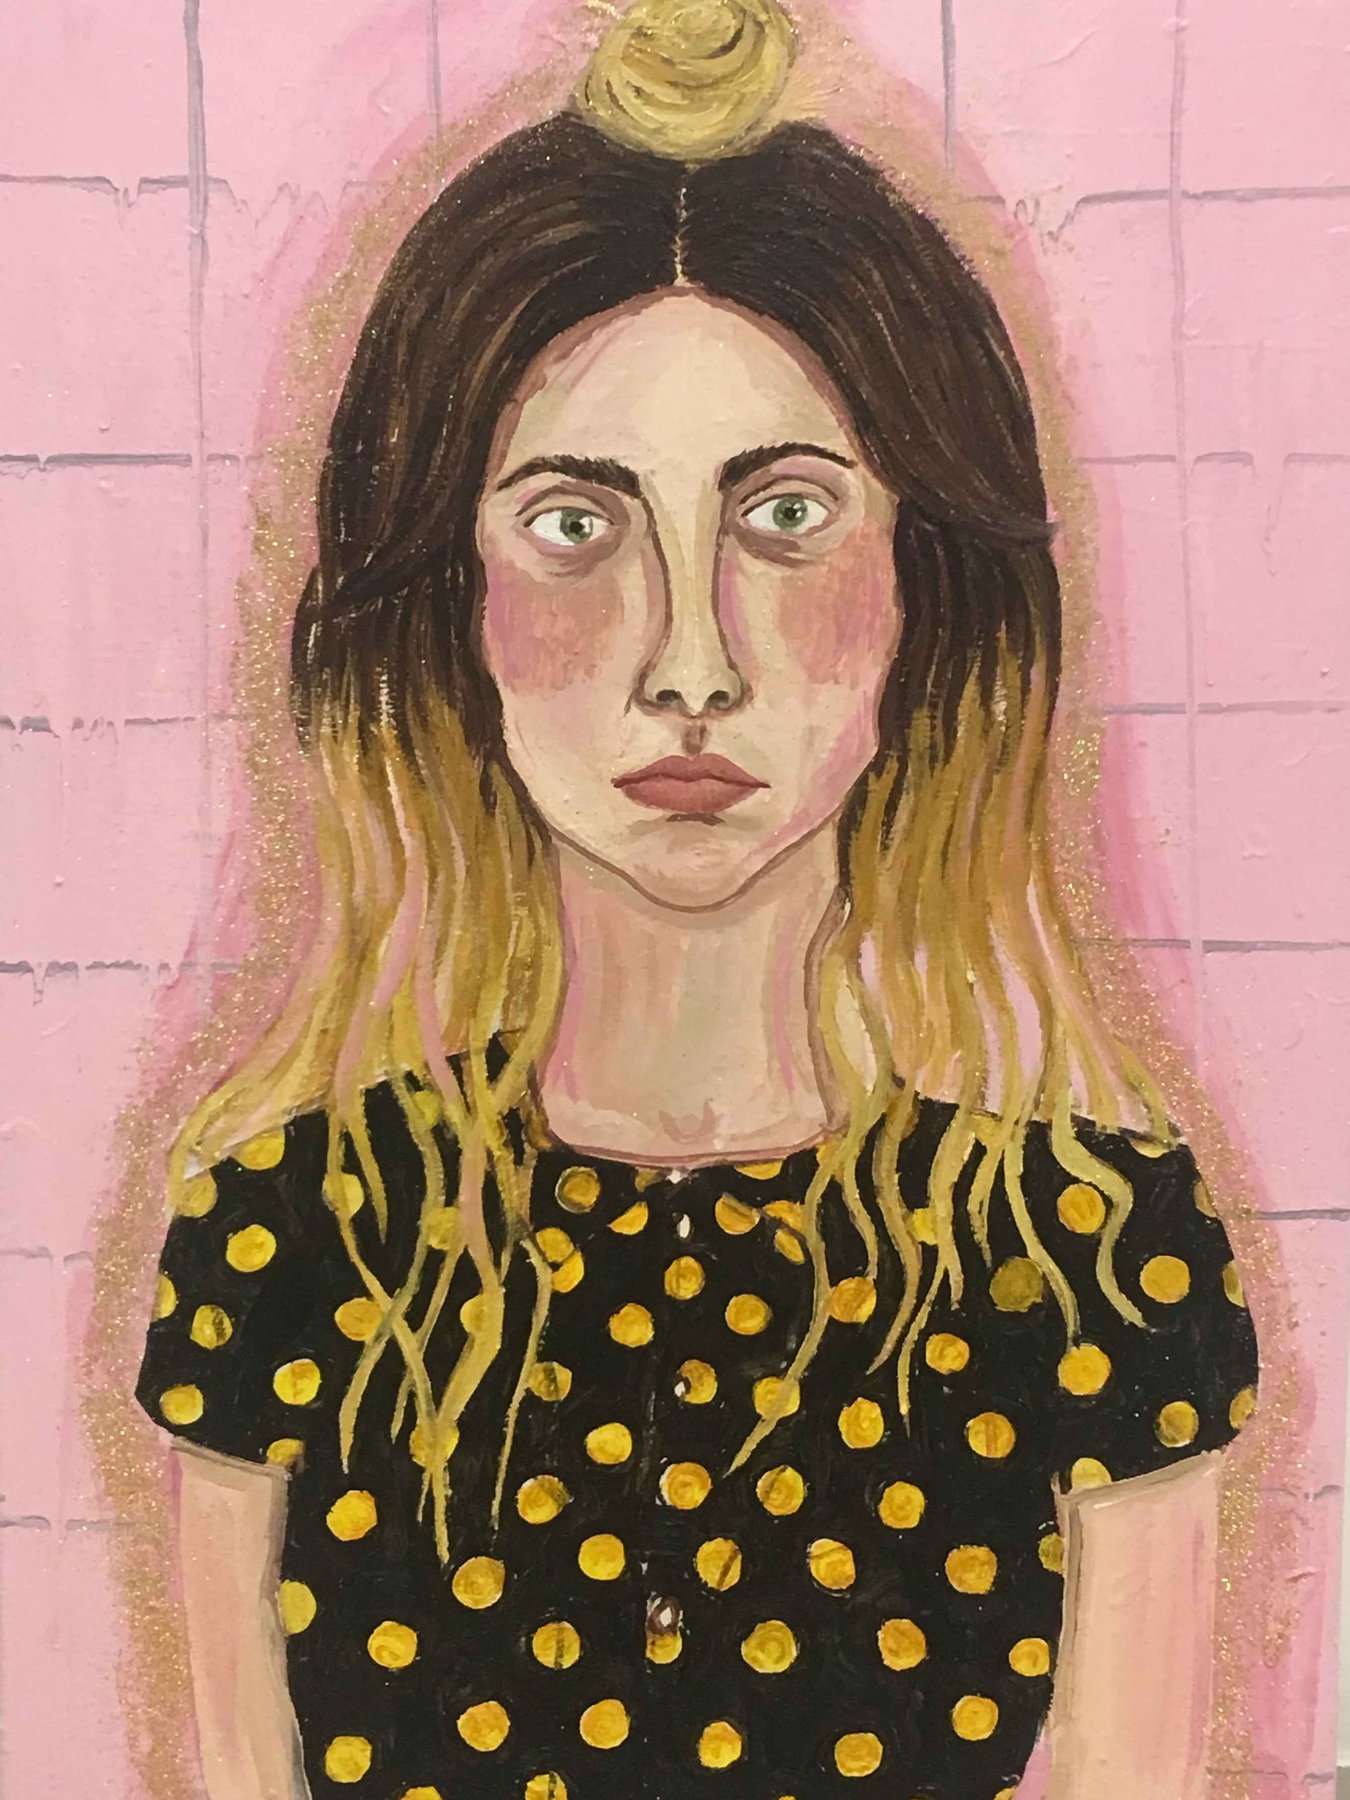 Self portrait in pink